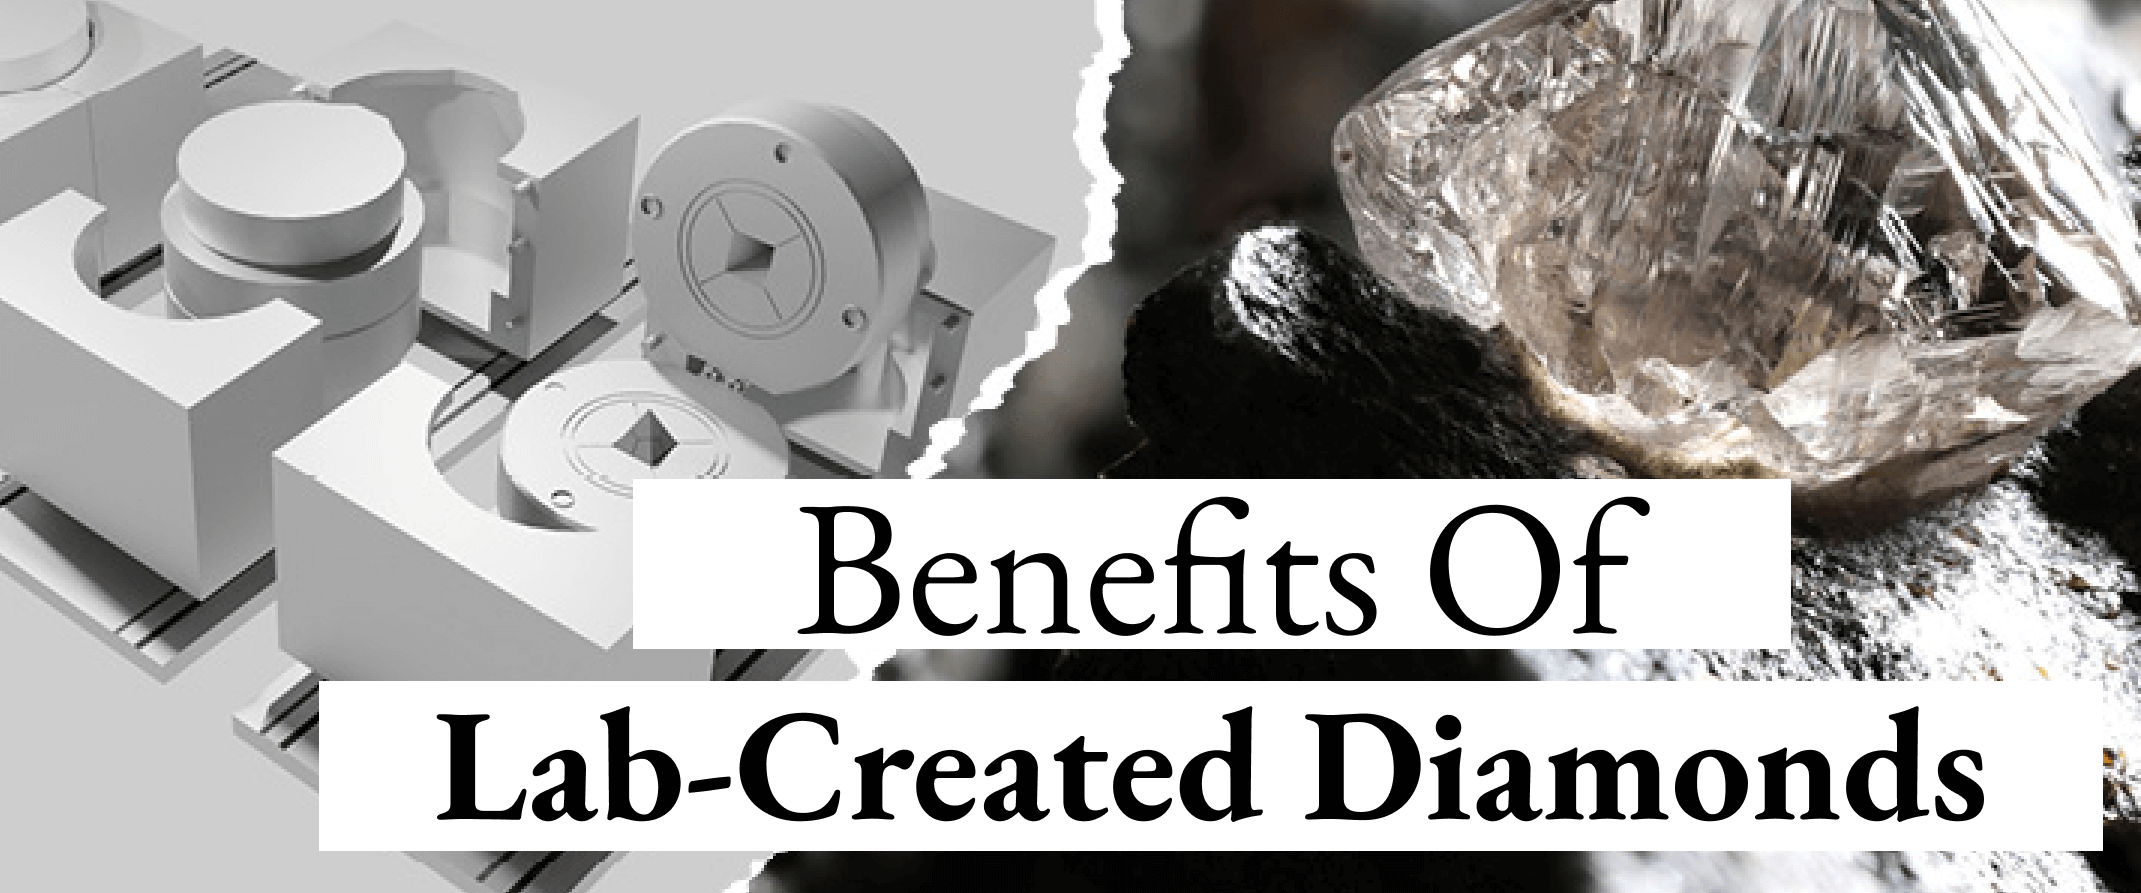 Benefits of Lab-Created Diamond